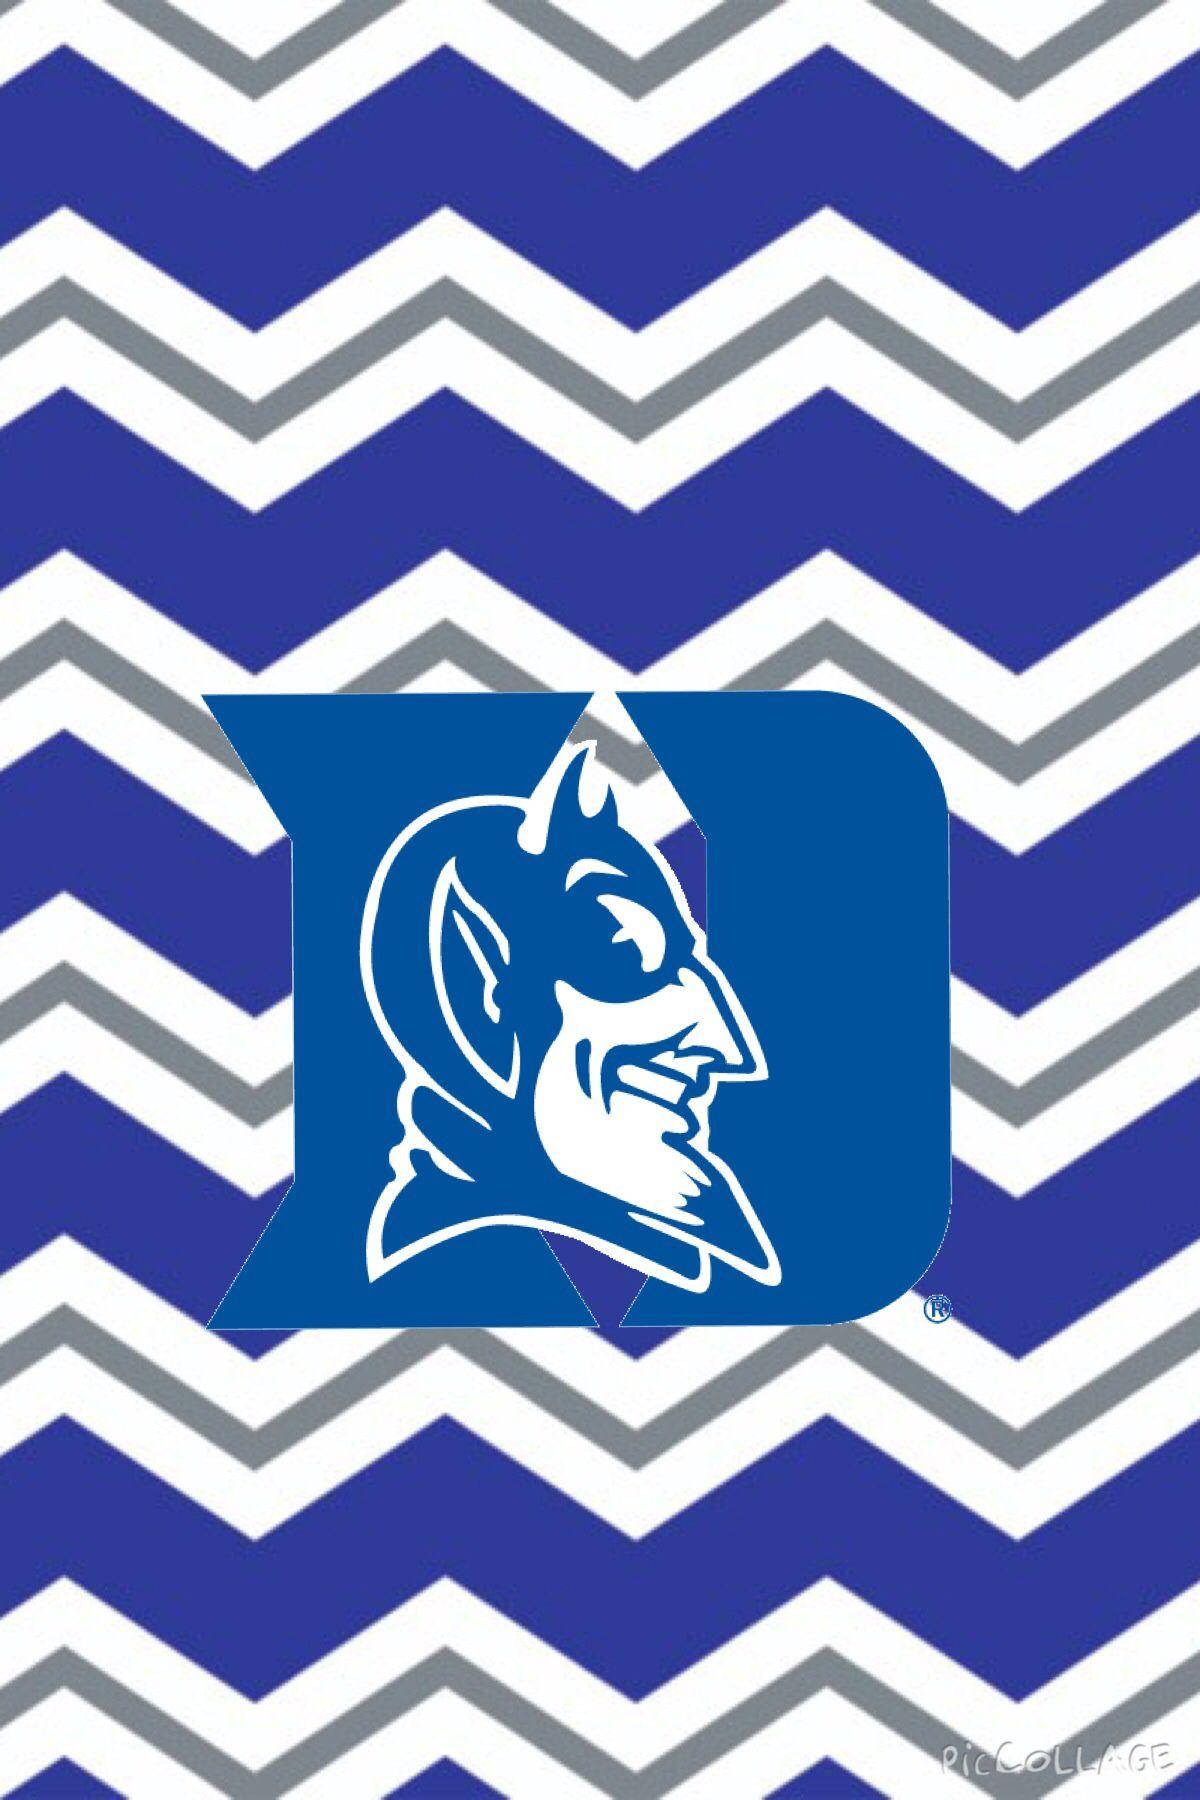 Duke University Blue Patterns Wallpaper